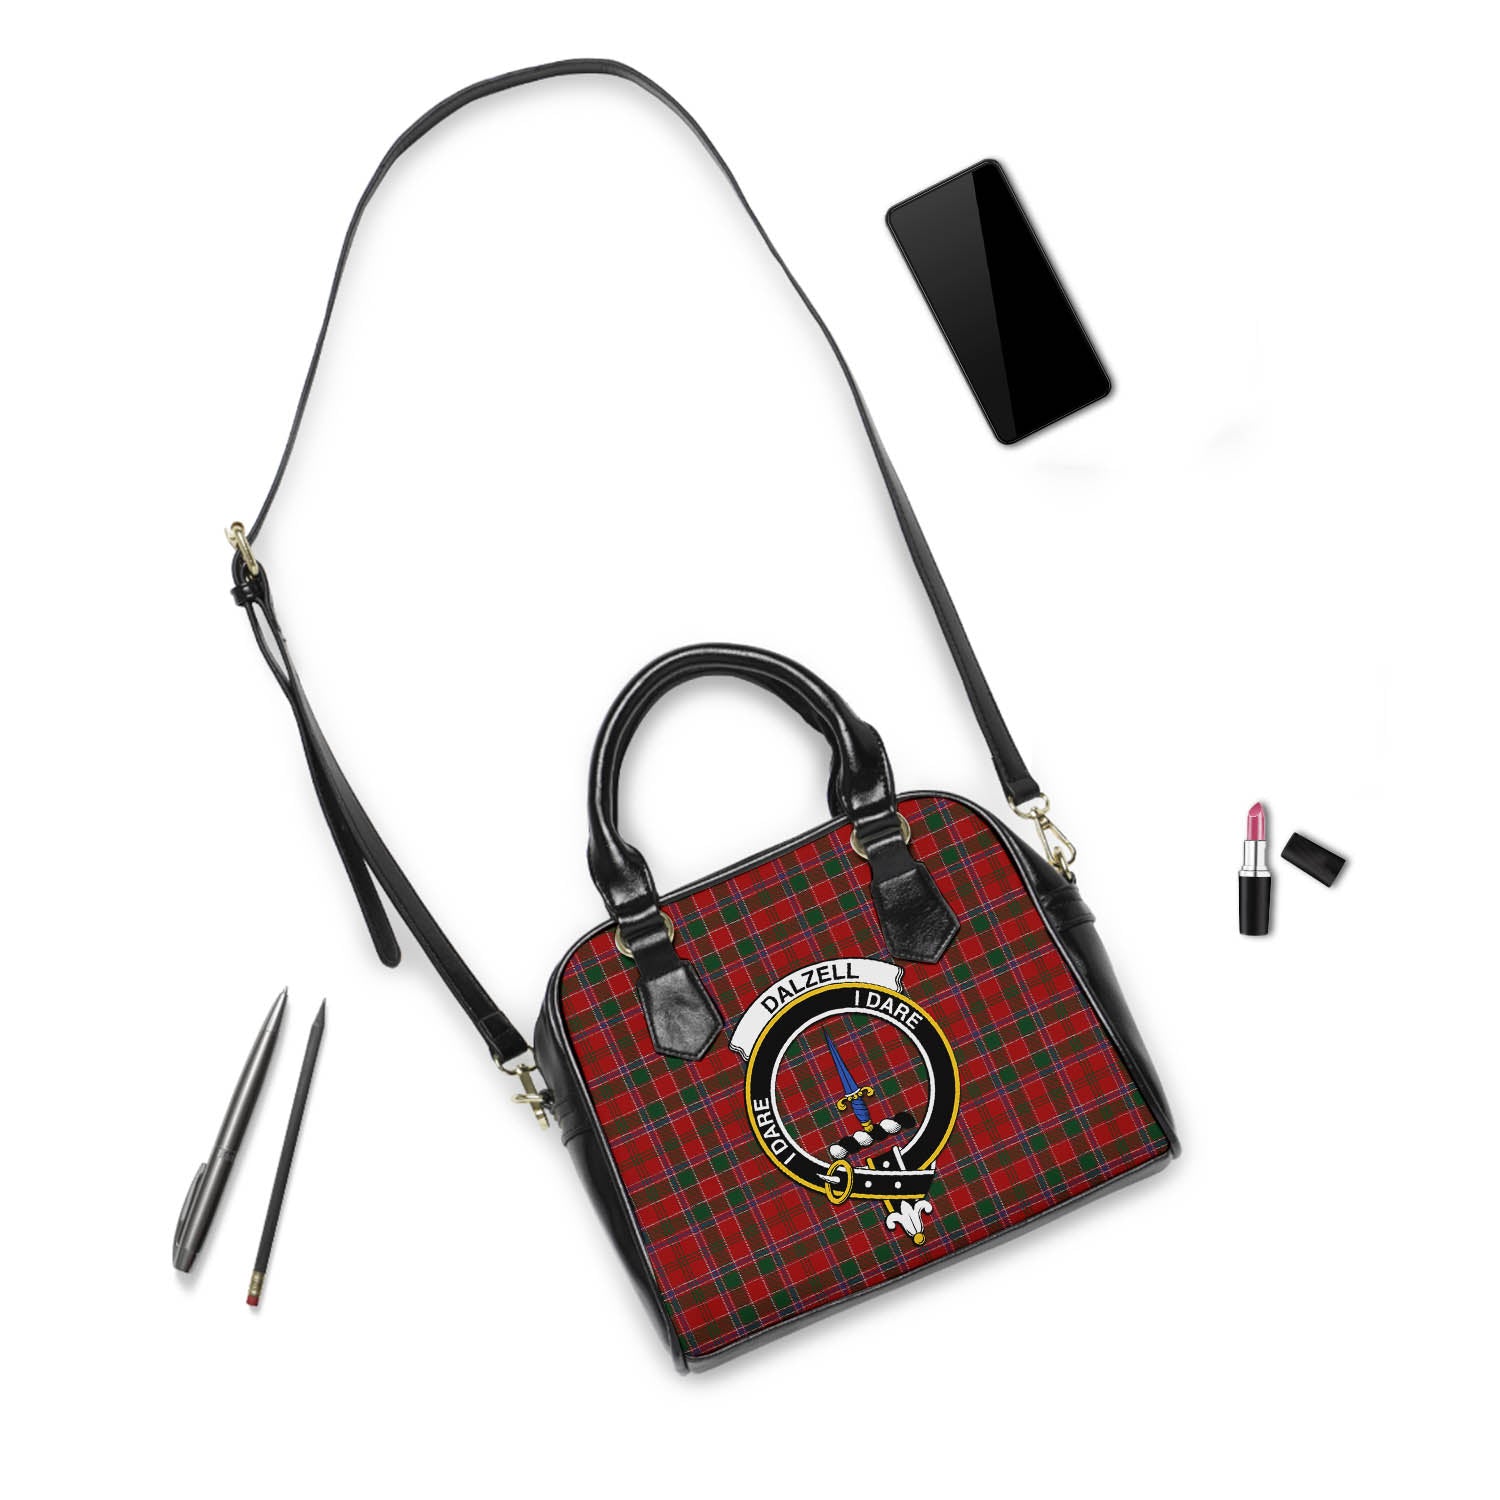 Dalzell (Dalziel) Tartan Shoulder Handbags with Family Crest - Tartanvibesclothing